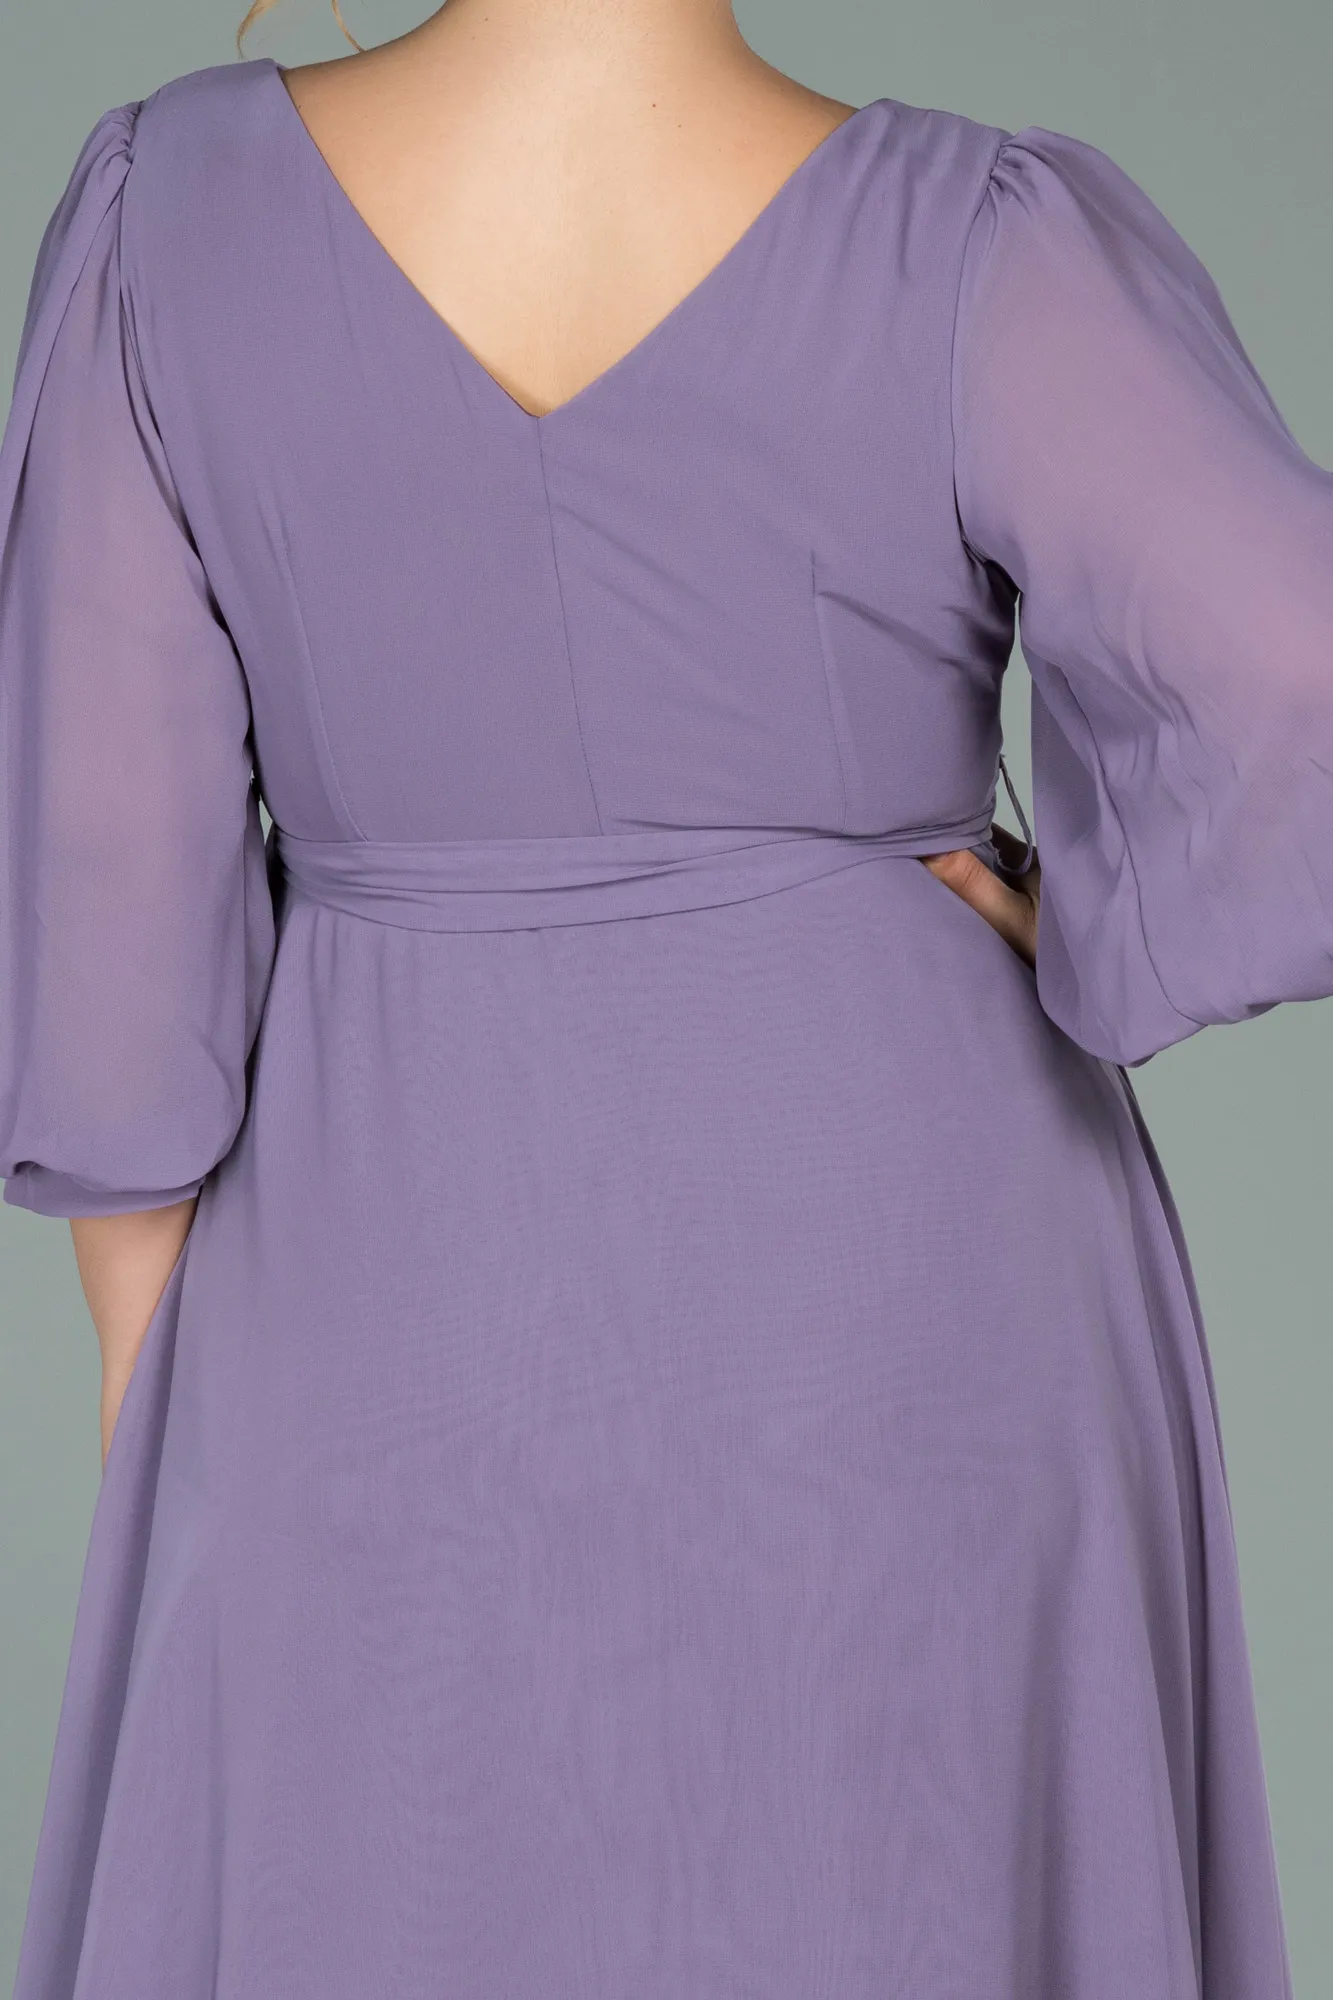 Lavender-Midi Chiffon Oversized Evening Dress ABK1083